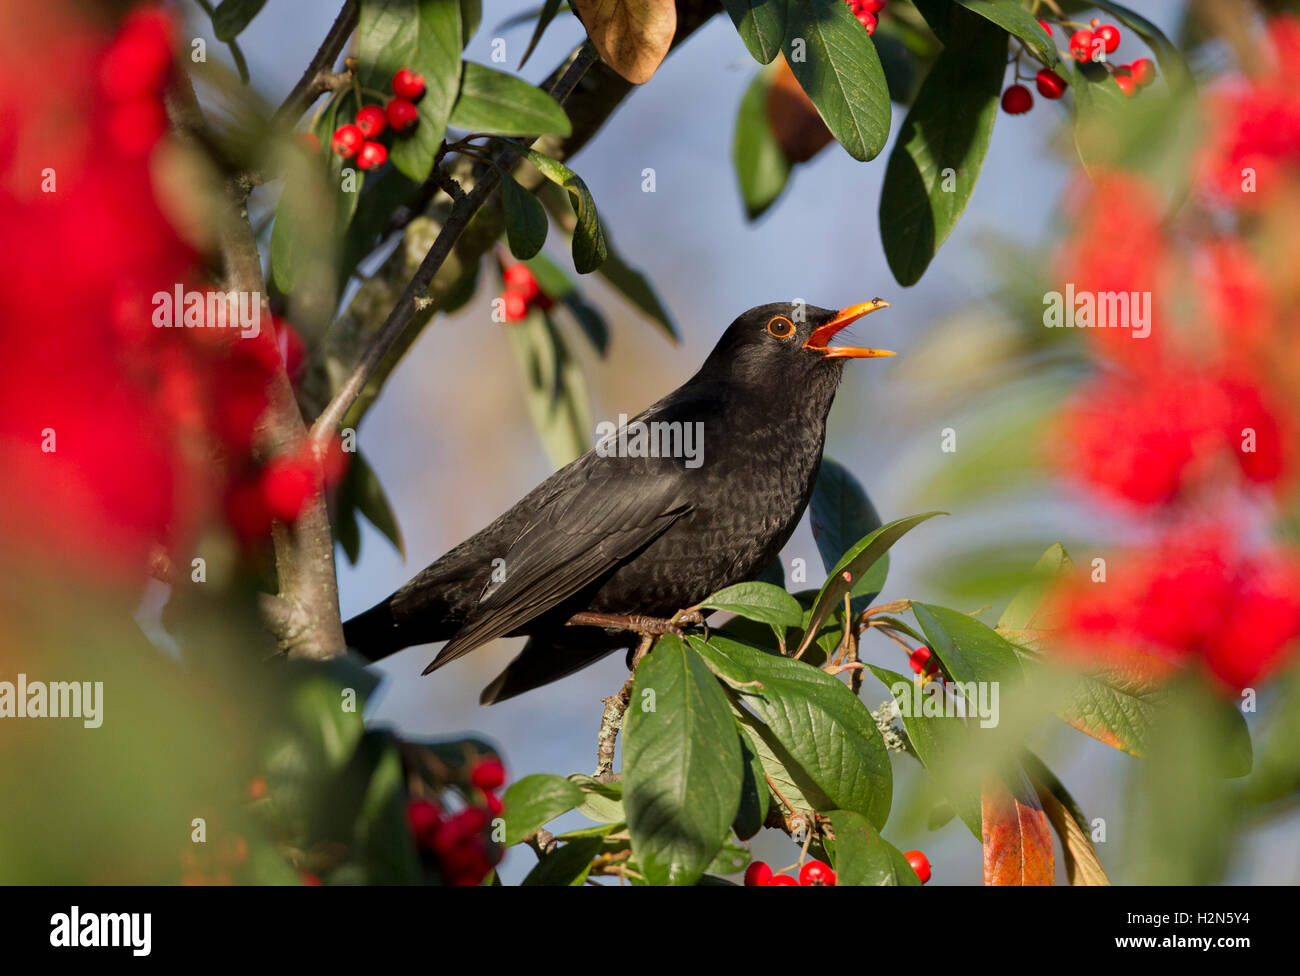 Blackbird, turdus merula, enjoying berries Stock Photo